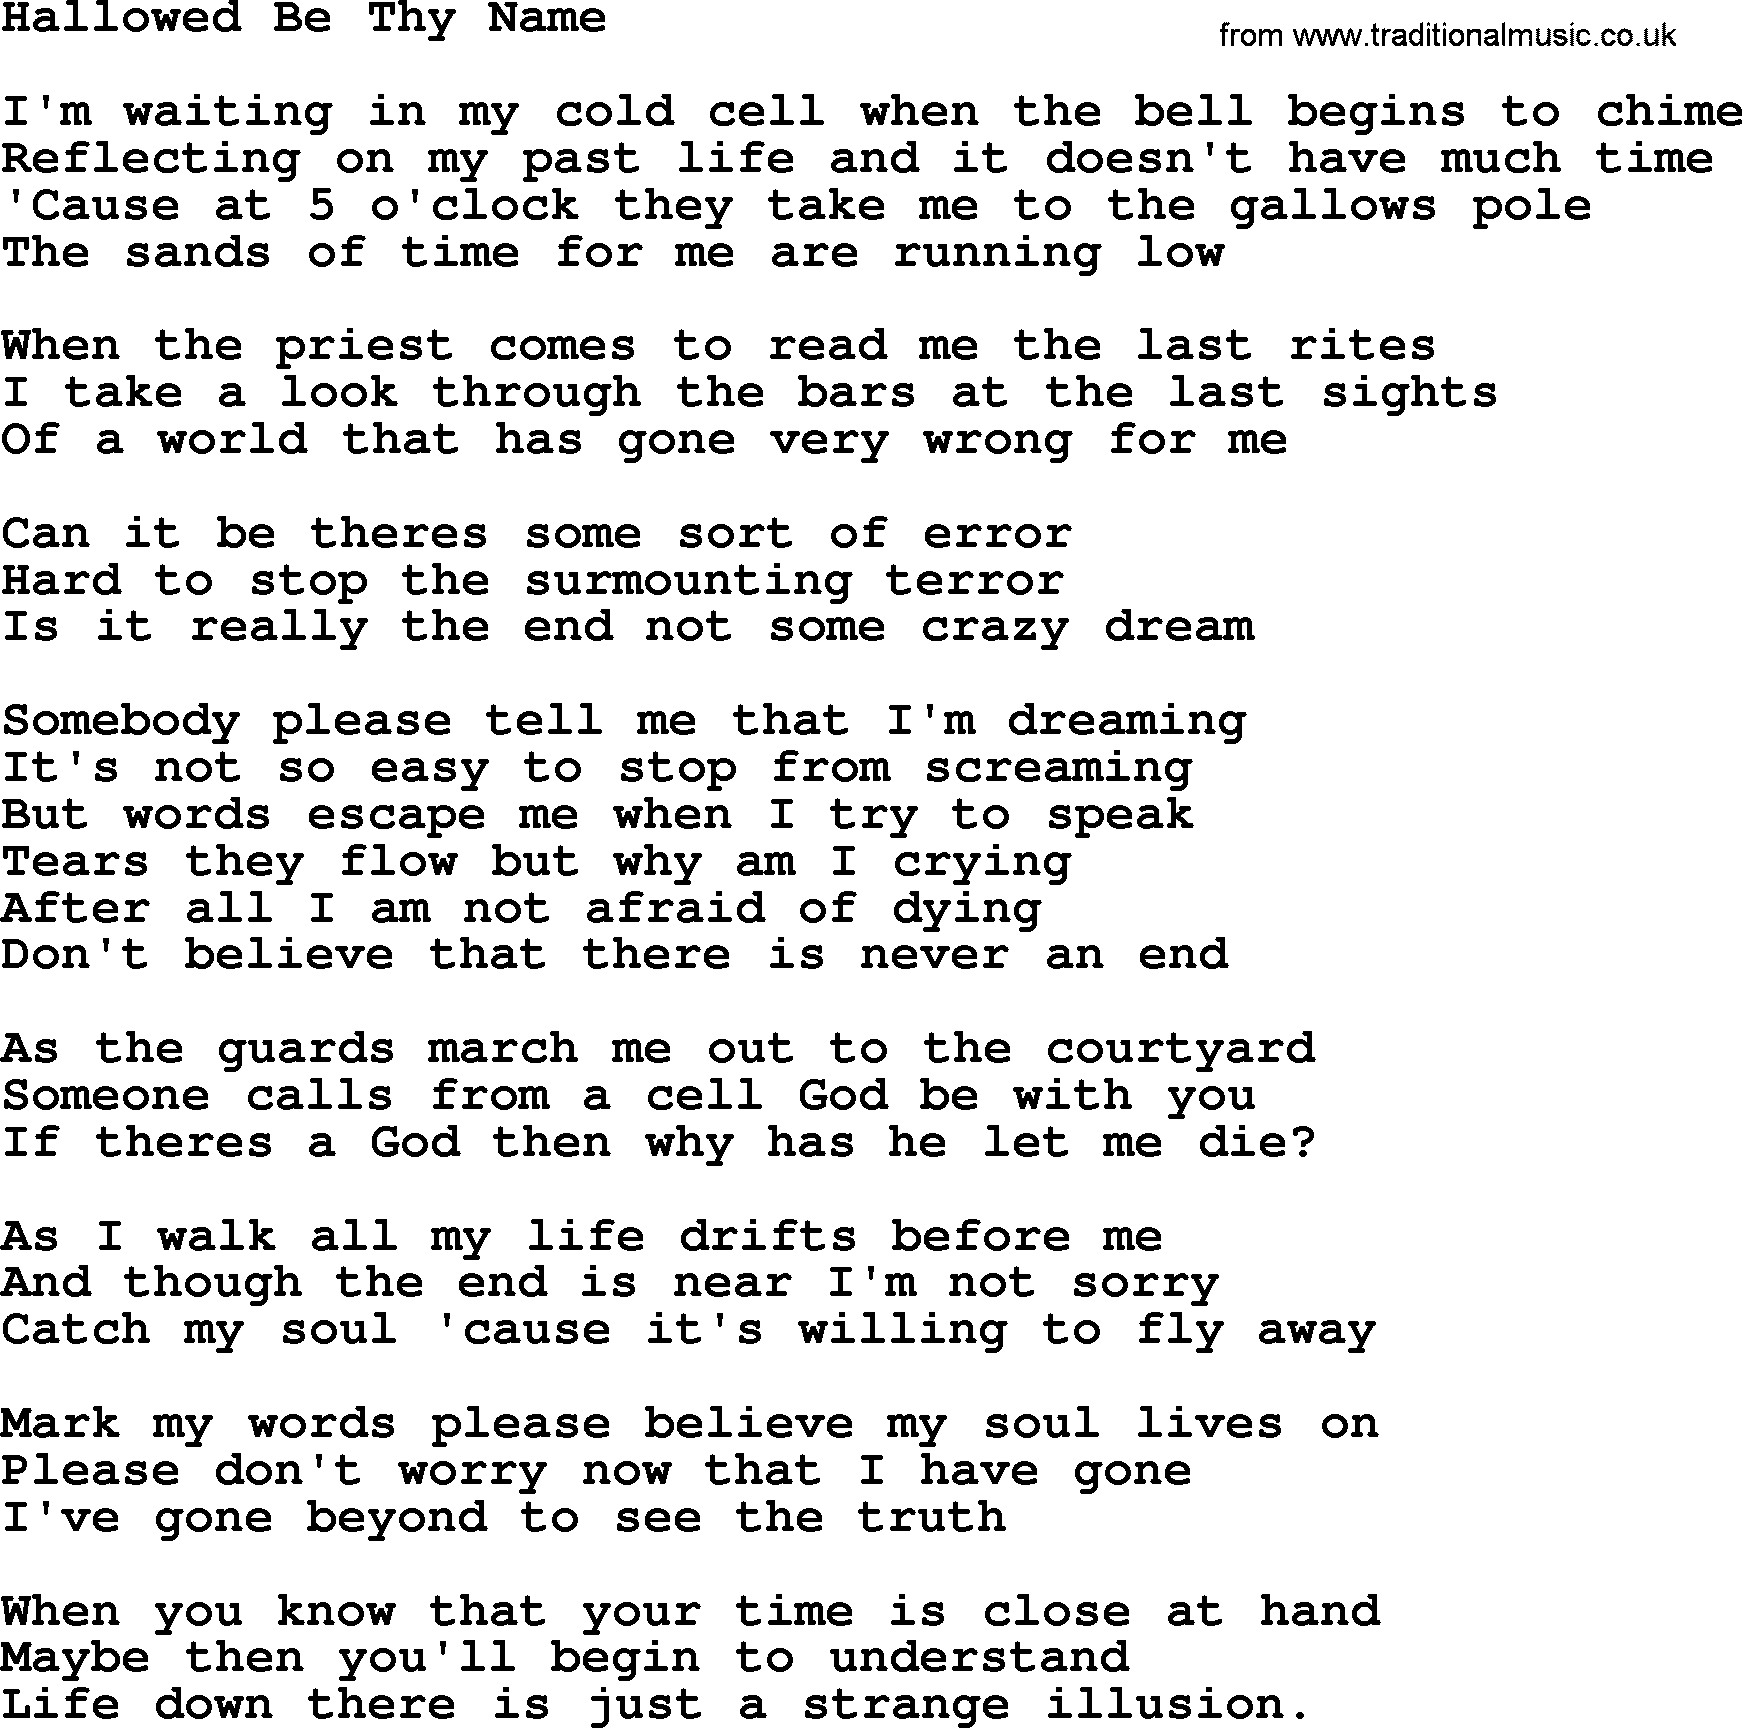 Joan Baez song Hallowed Be Thy Name, lyrics